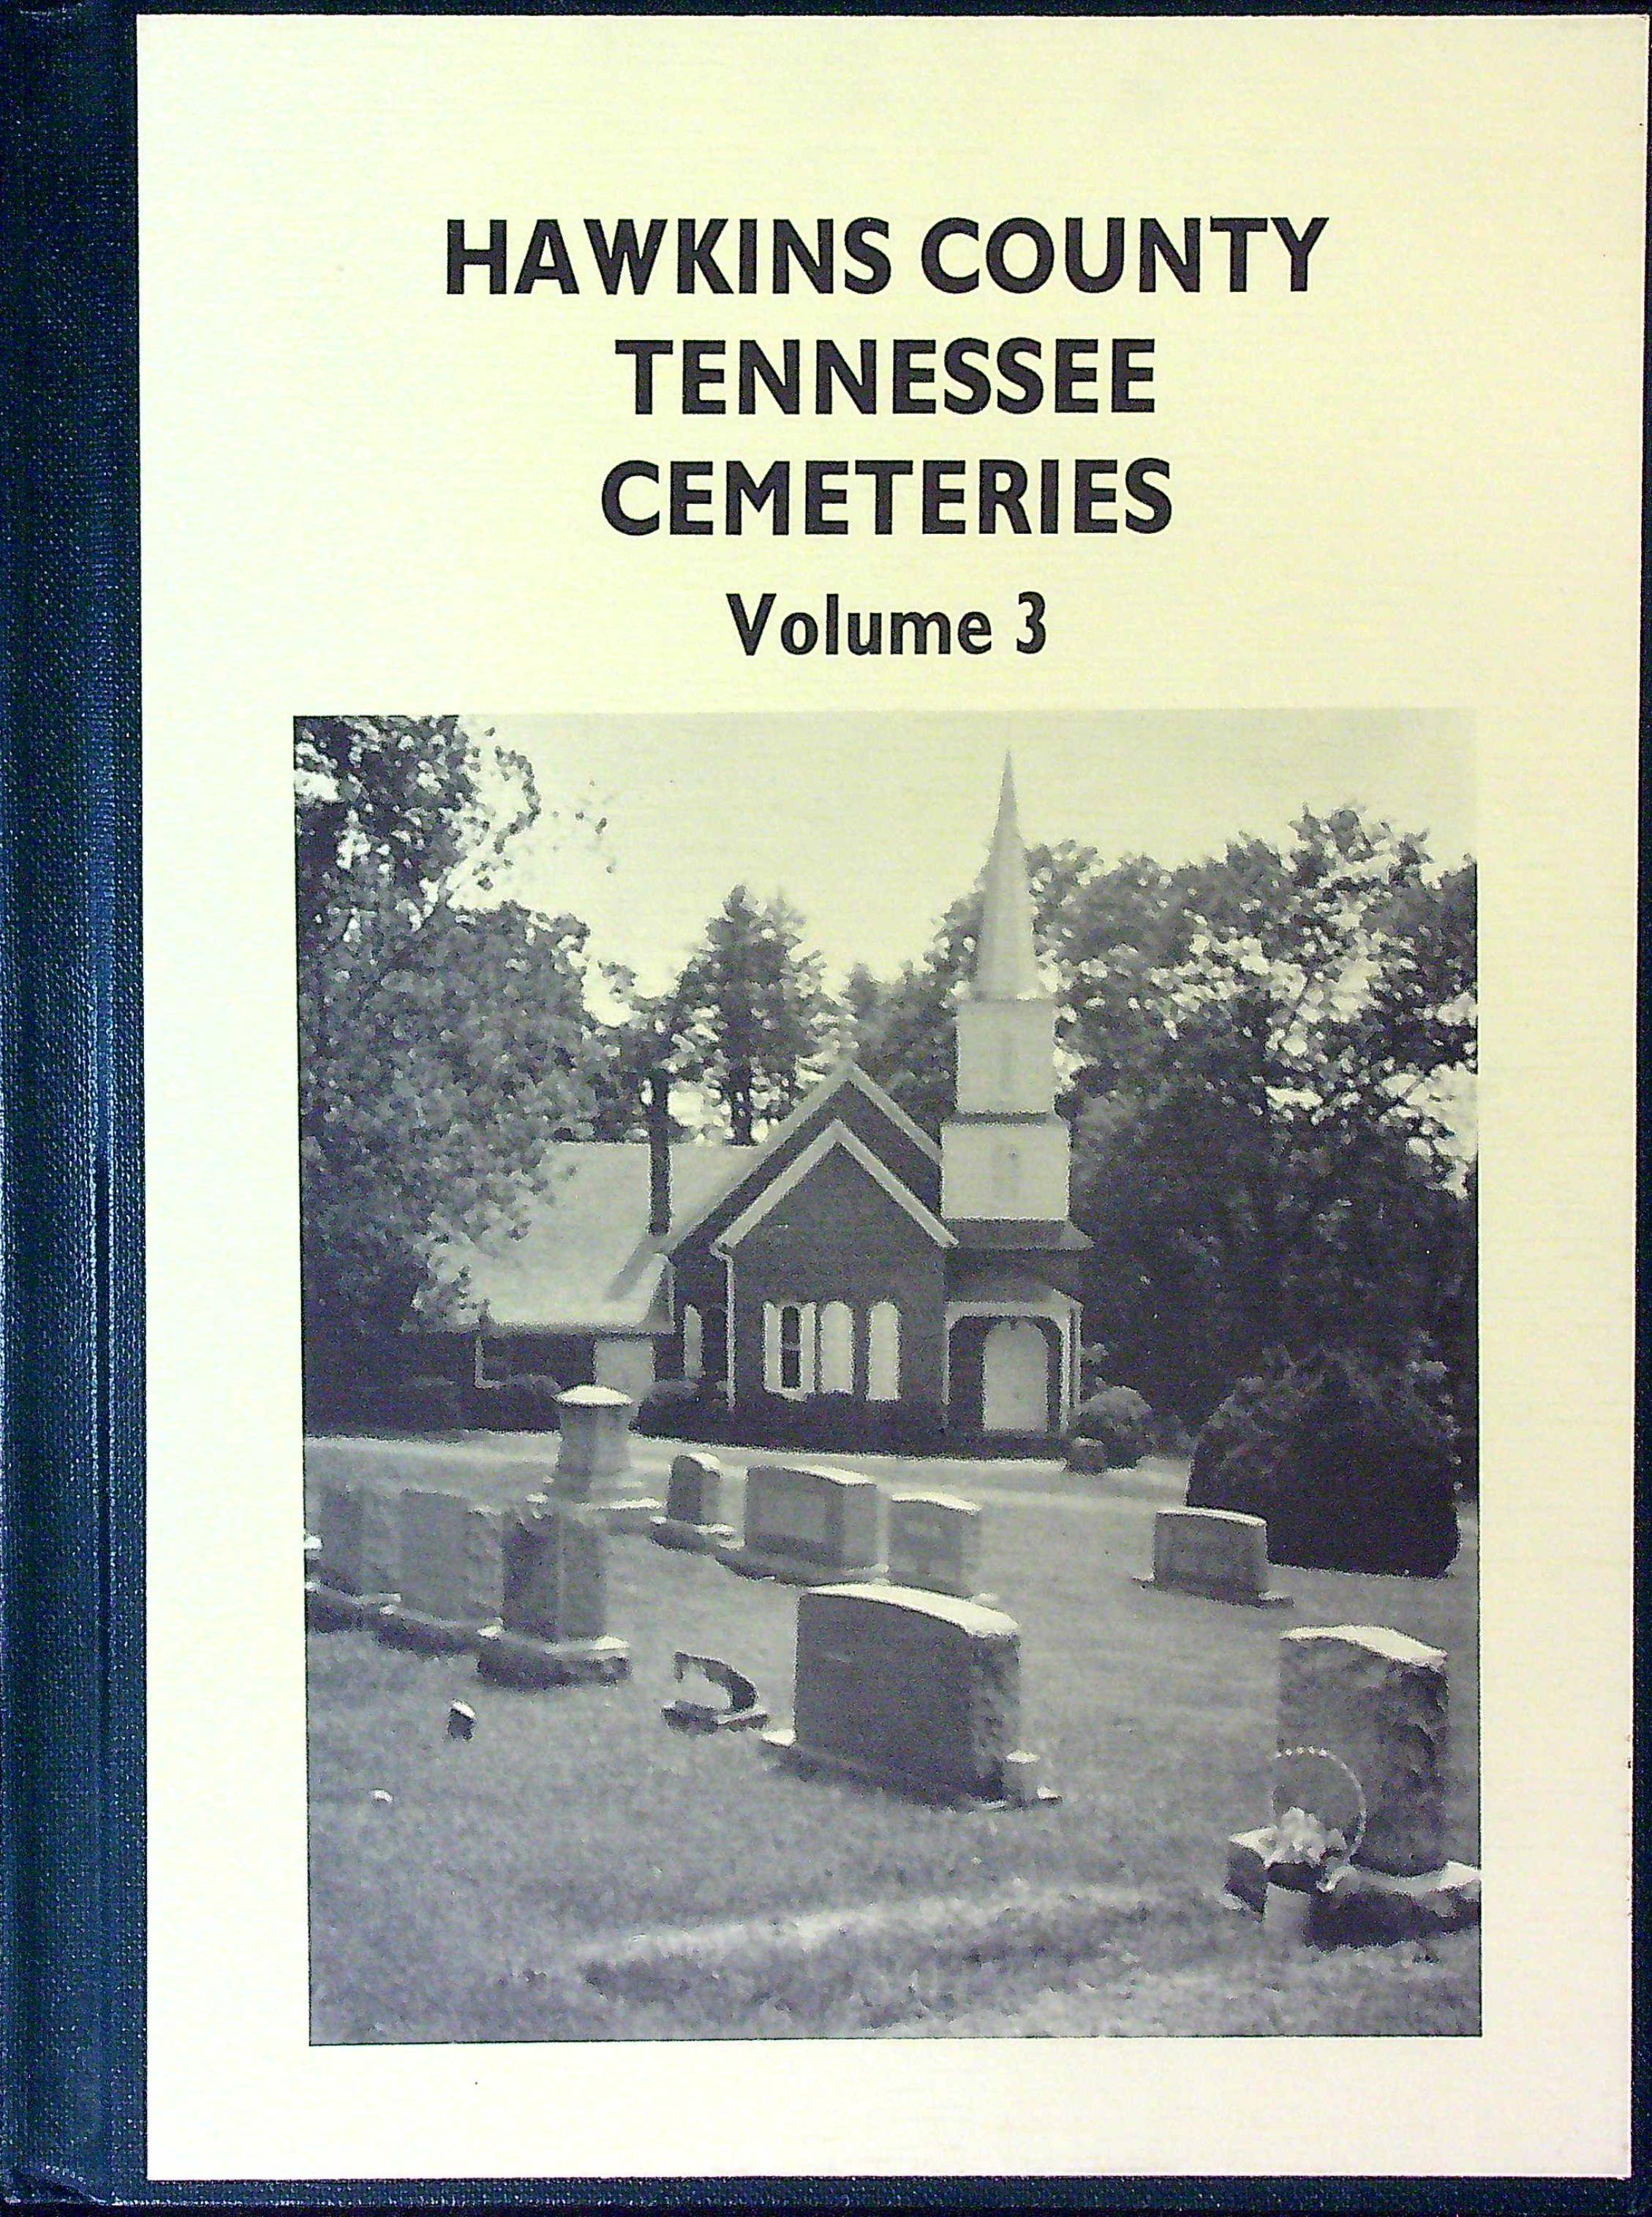 Hawkins County Tennessee Cemeteries, Volume 3 by Hawkins County ...